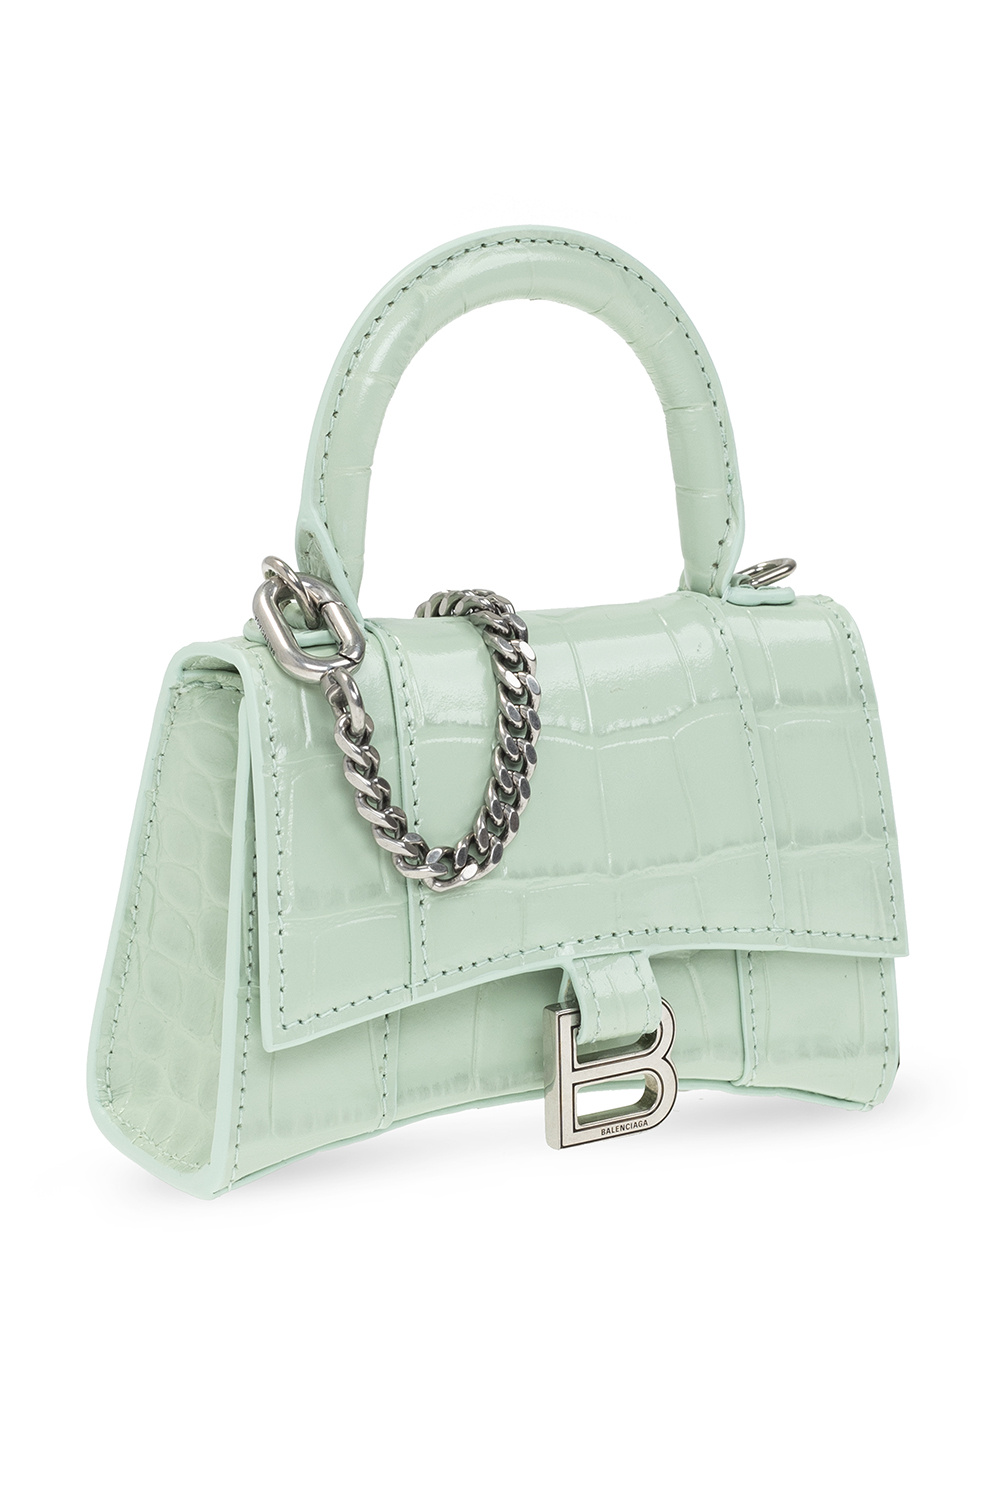 Balenciaga ‘Hourglass Mini’ shoulder Prada bag